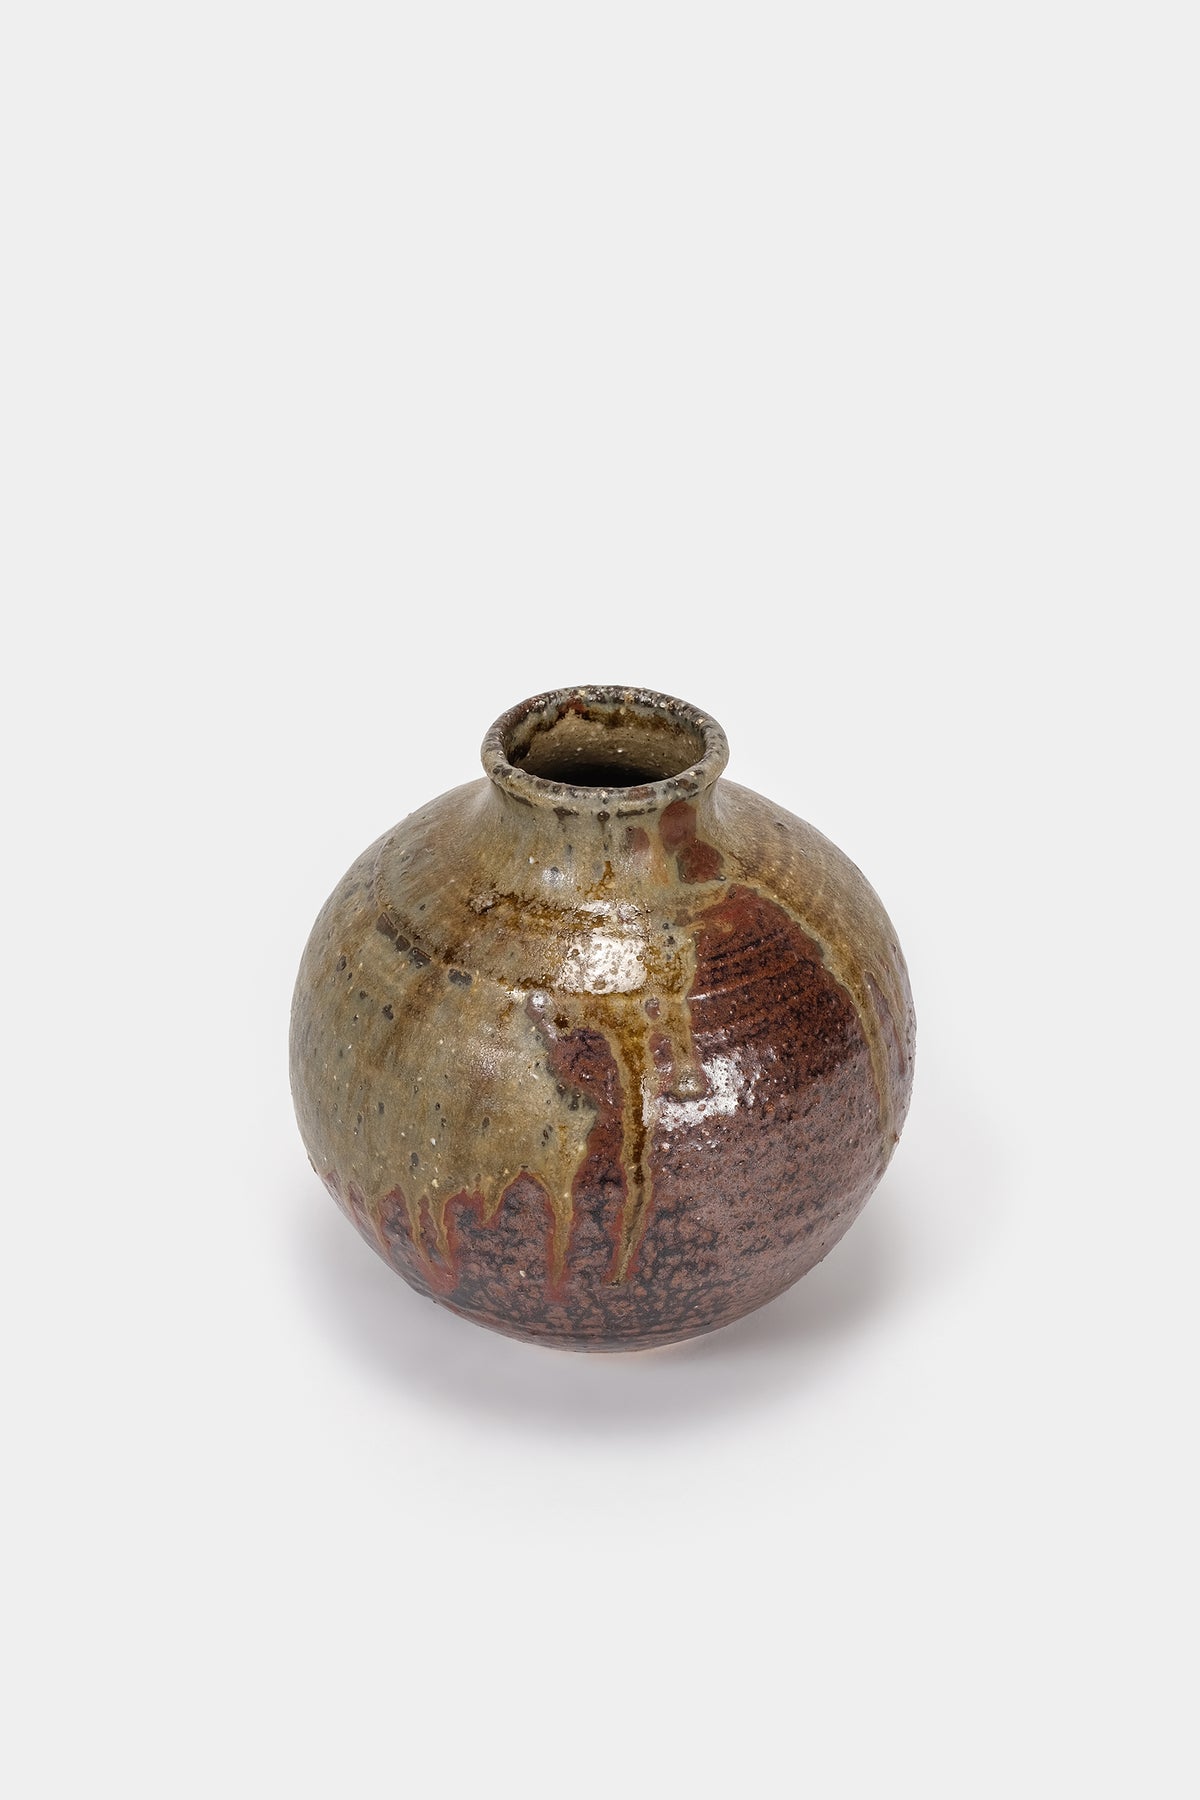 Hans Huber, Ceramic Vase, Switzerland, 70s